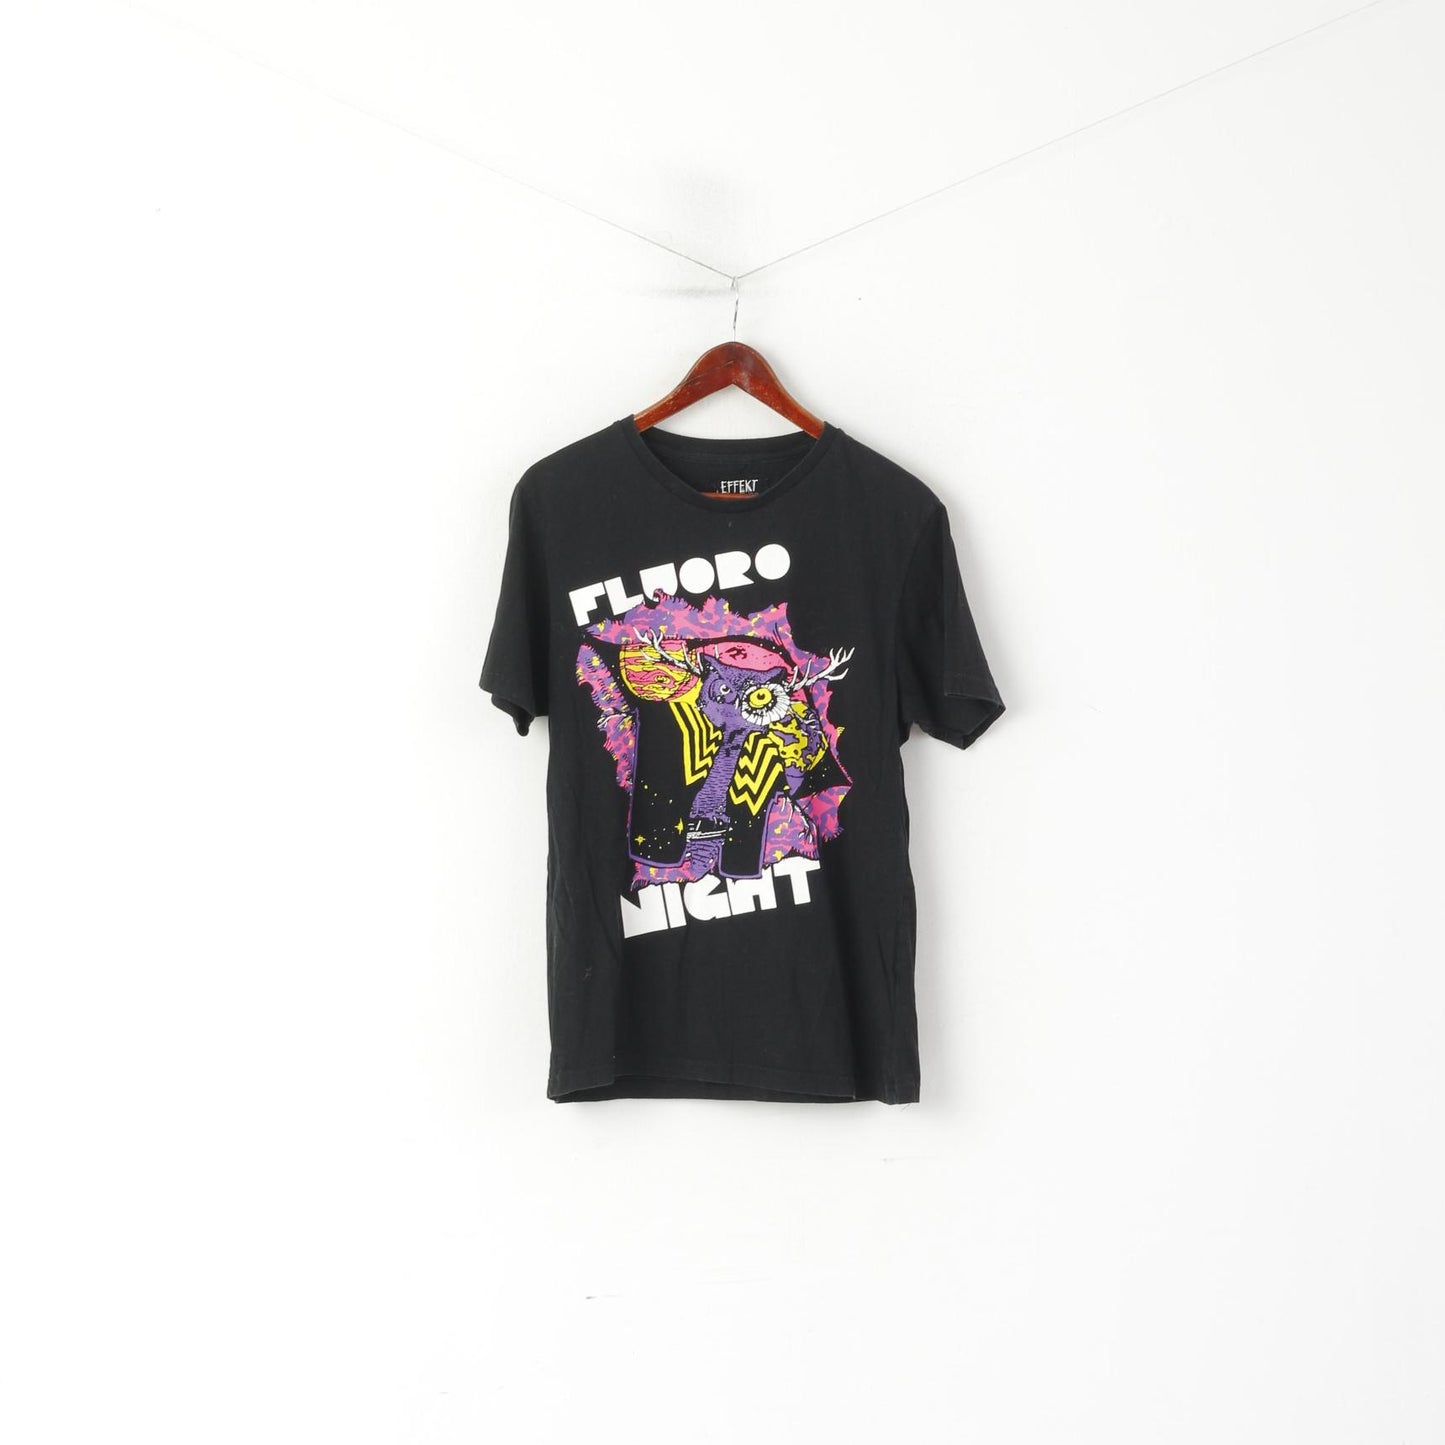 Effekt Women M T-Shirt Black Cotton Neon Graphic Fluoro Night Top